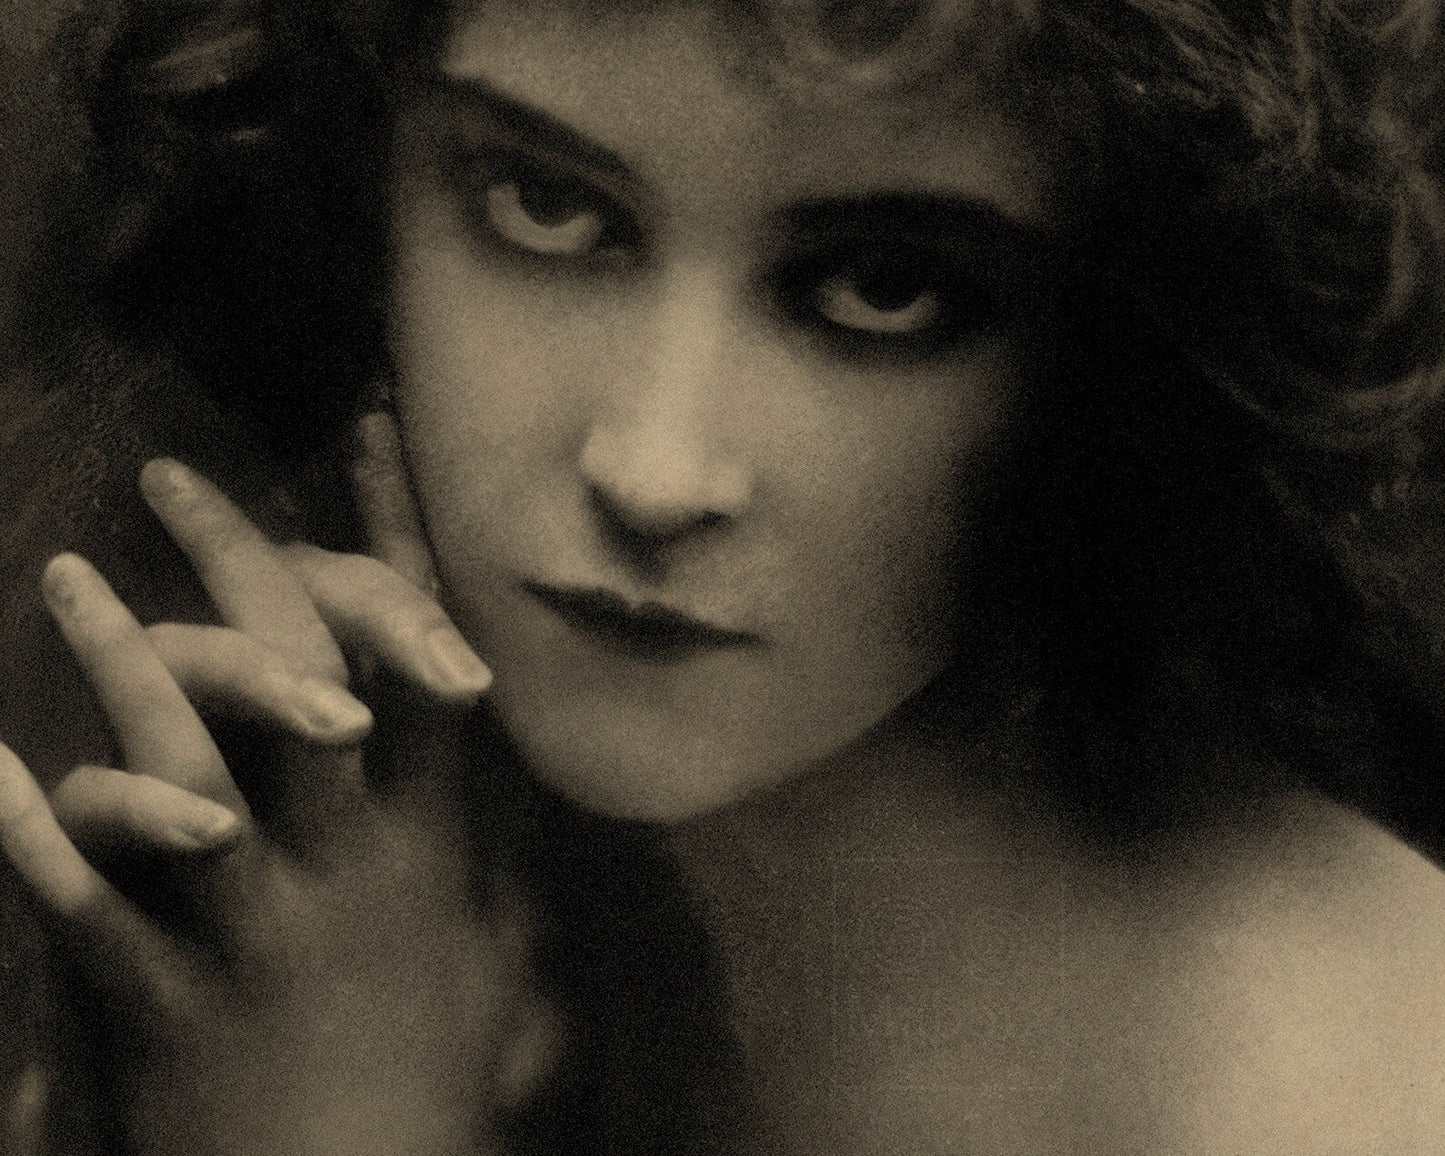 Vintage Photo Postcard "Nocturnes" (c.1900) Glamourous Gothic Vamp Scene - Mabon Gallery